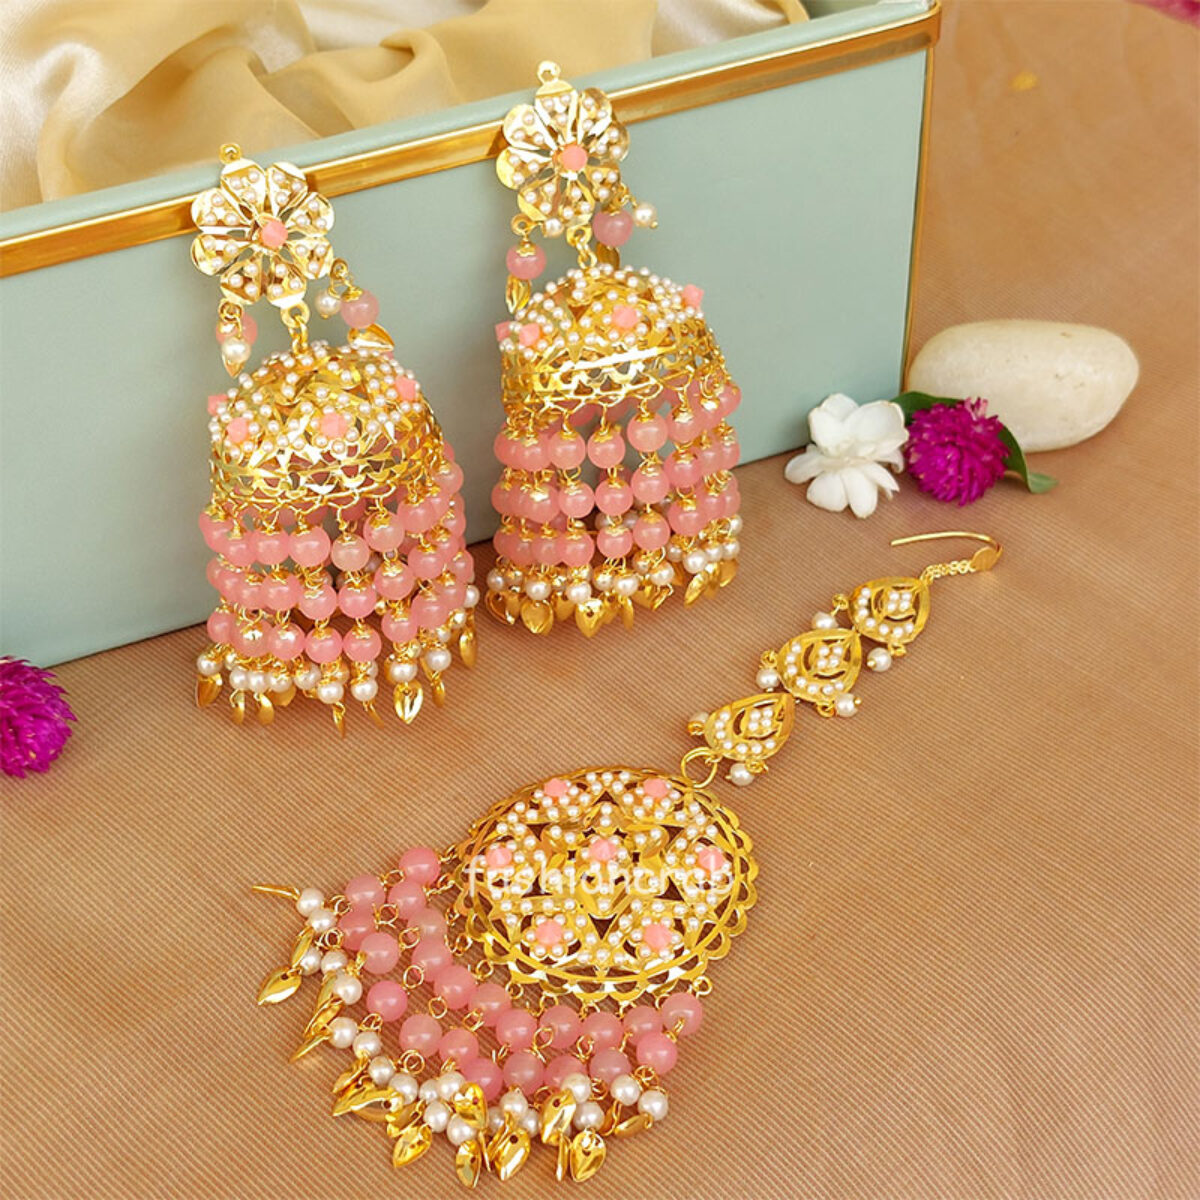 Pretty in Pink Earrings – The Yellow Butterfly Jewelry